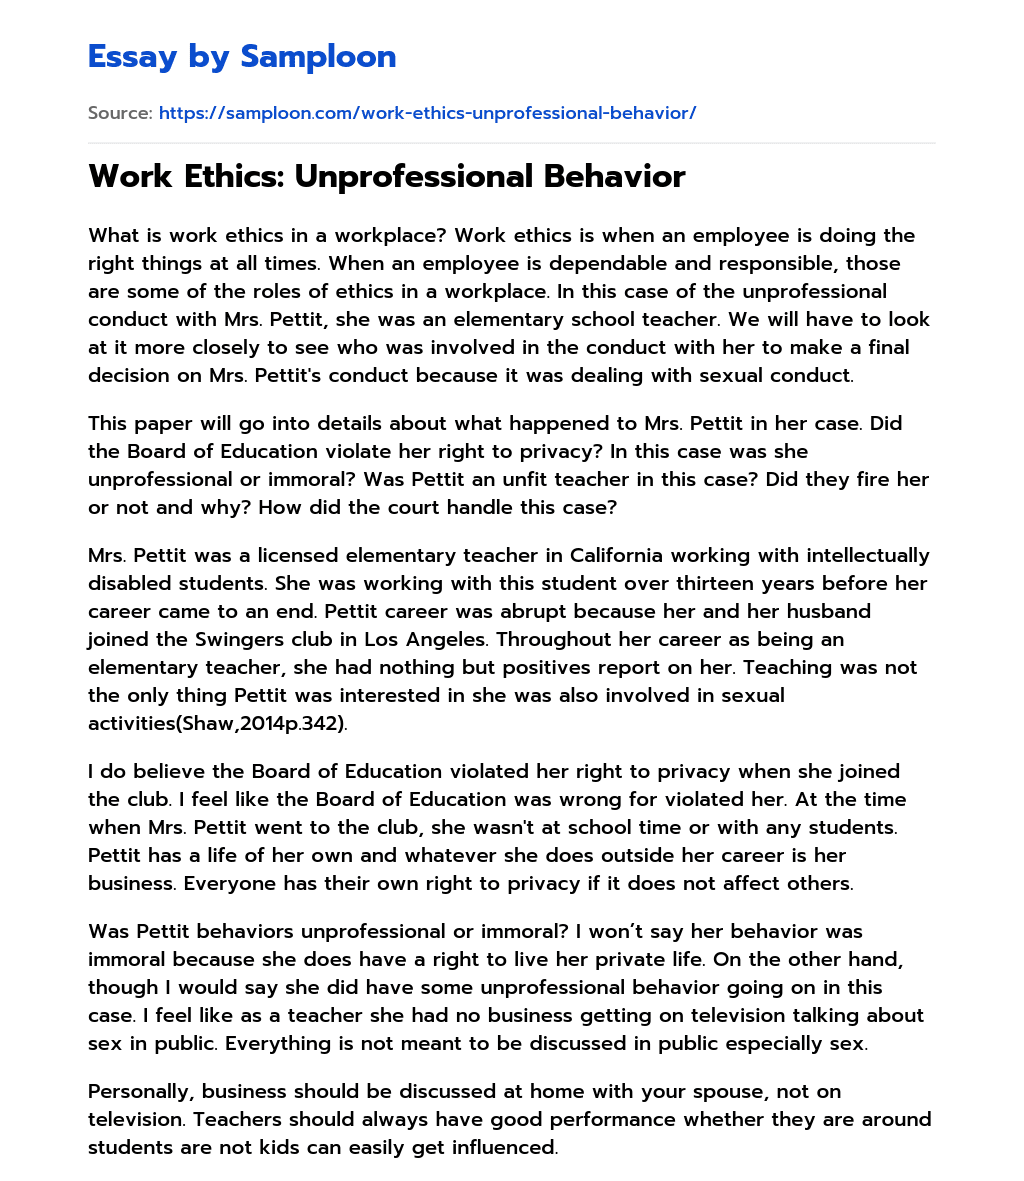 Work Ethics: Unprofessional Behavior essay